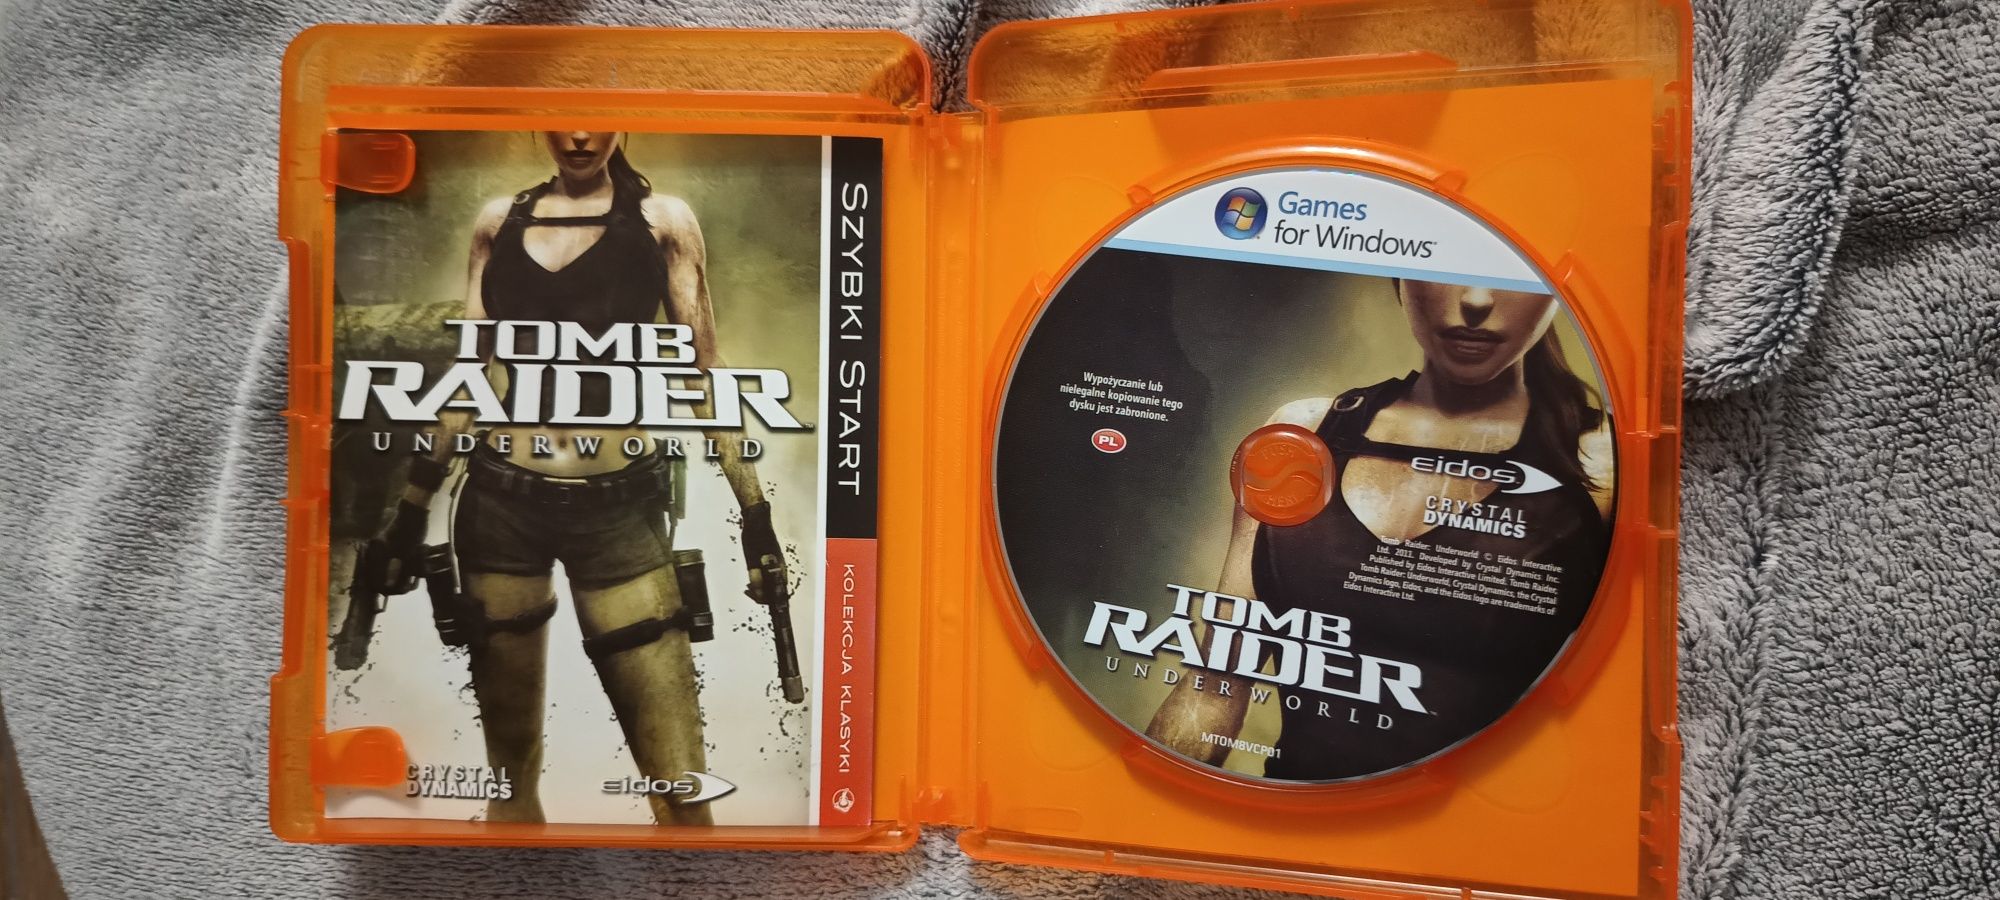 Tomb Raider Undergworld PC pomarańczowa kolekcja klasyki